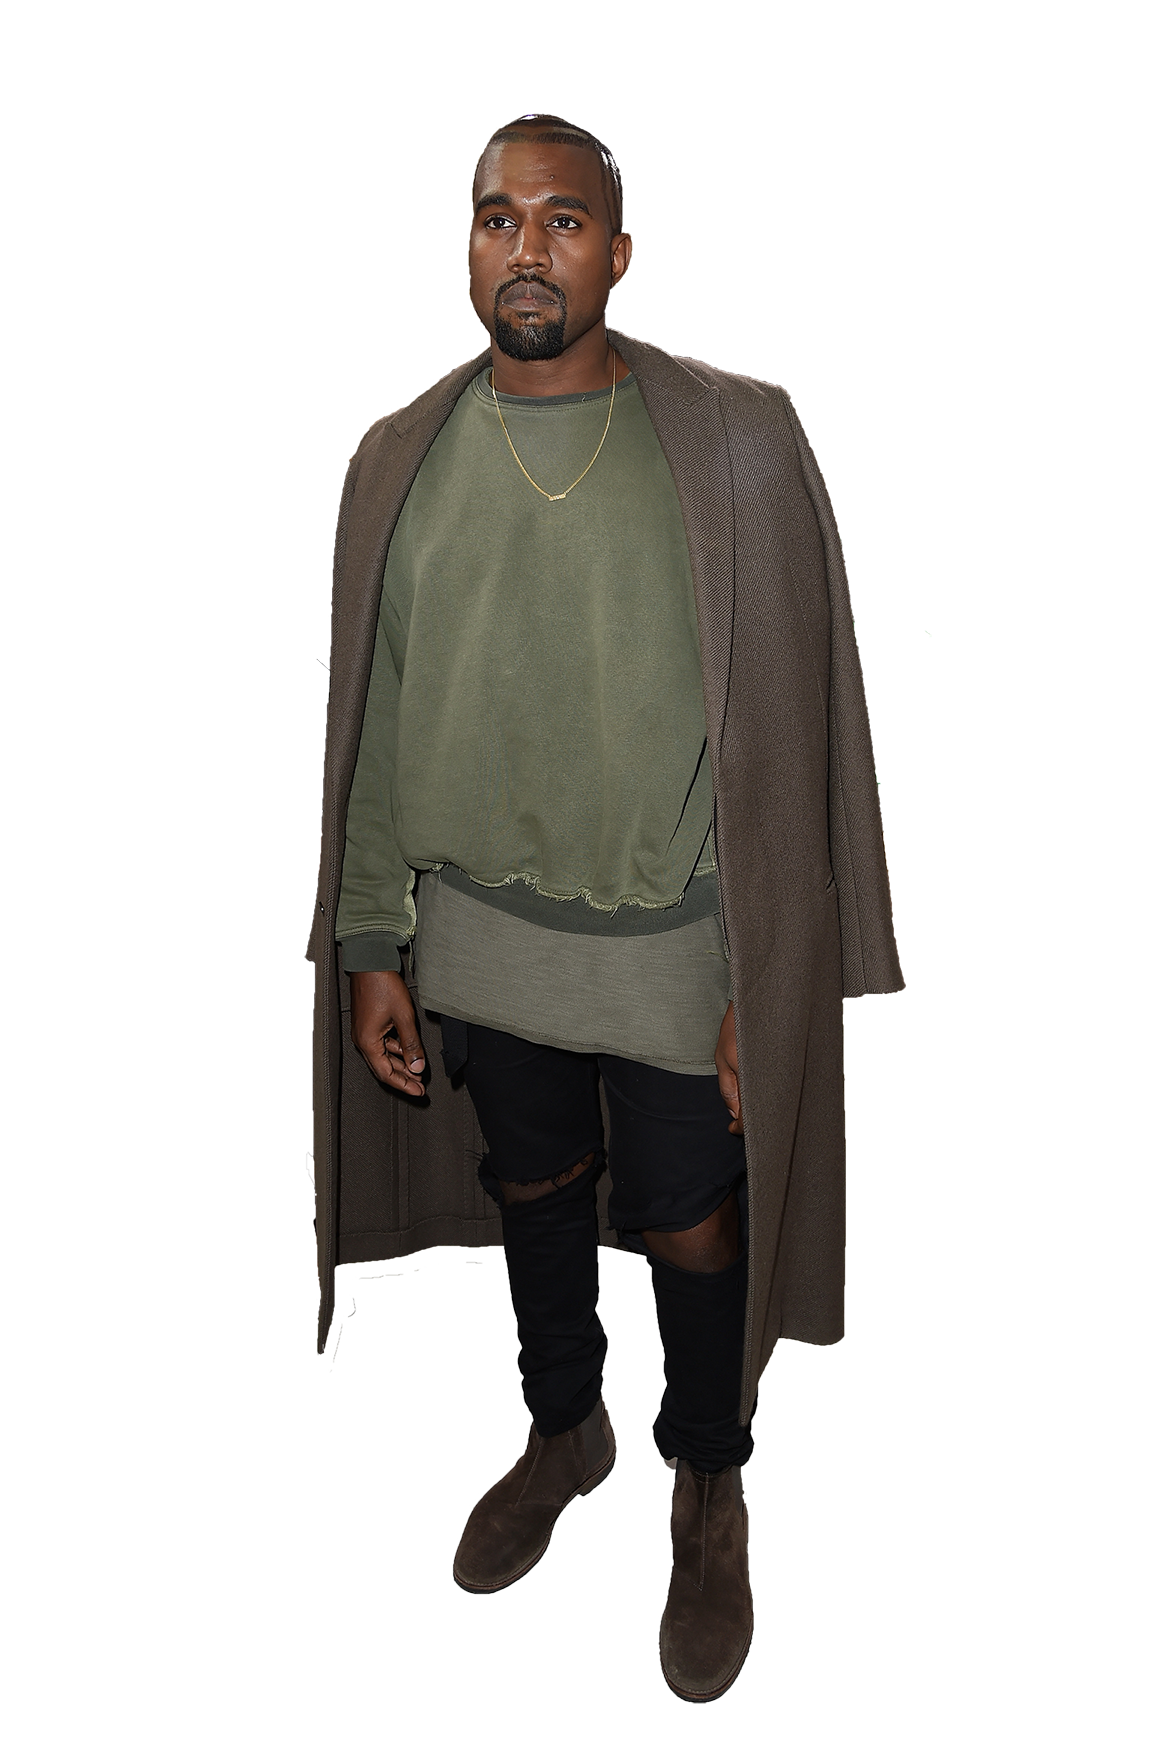 Kanye Rapper West PNG Image High Quality PNG Image